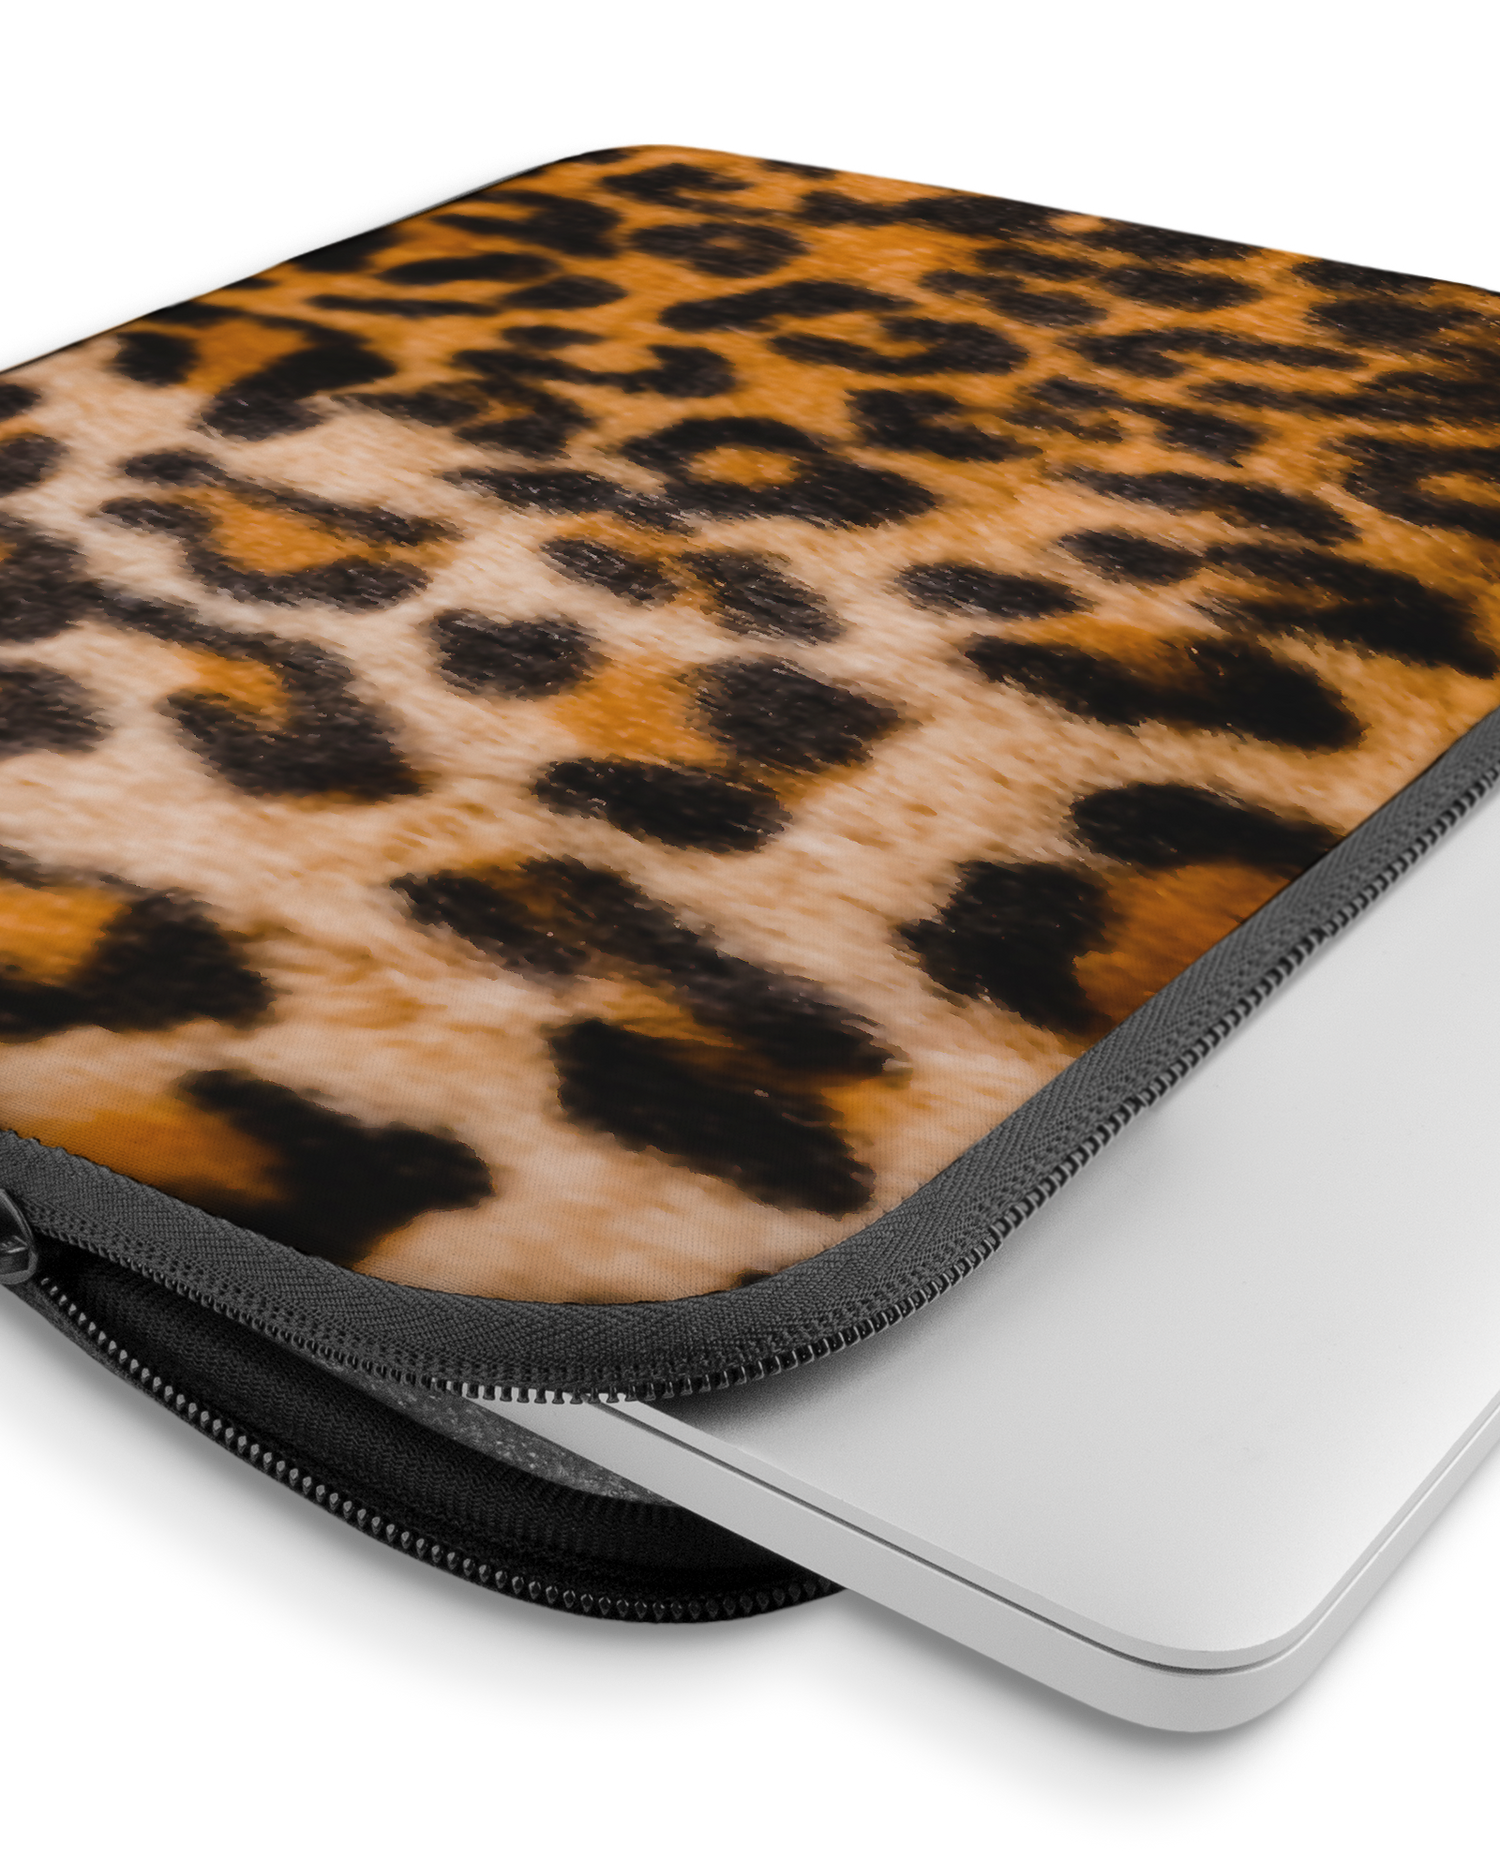 Leopard Pattern Laptop Case 15 inch with device inside